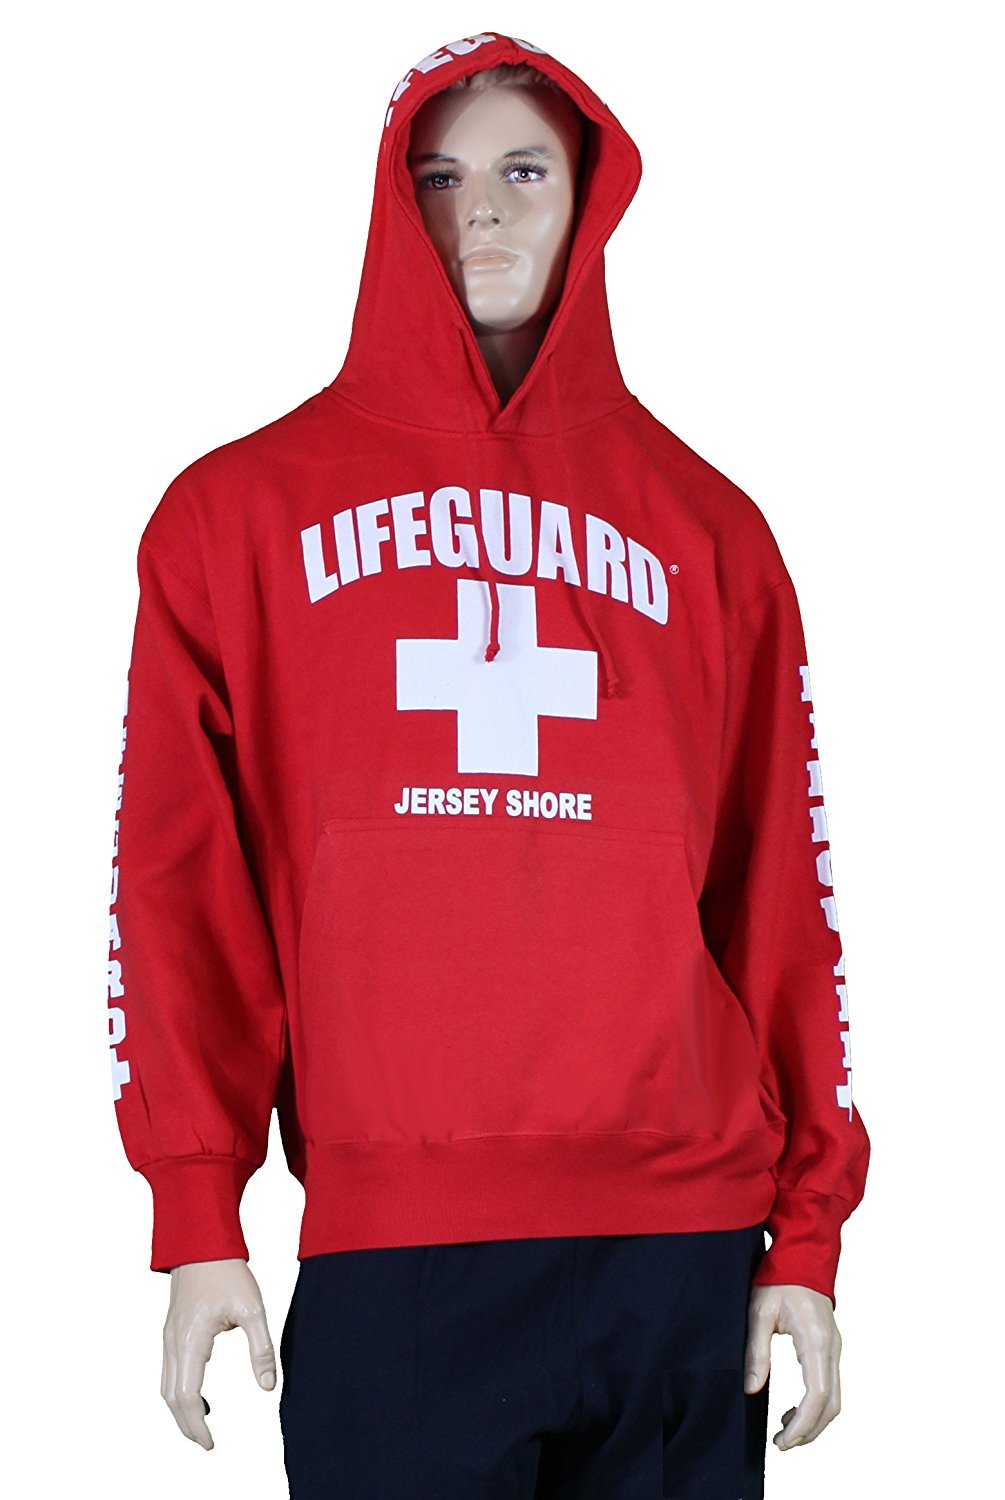 Lifeguard Jersey Shore NJ Life Guard Sweatshirt Red